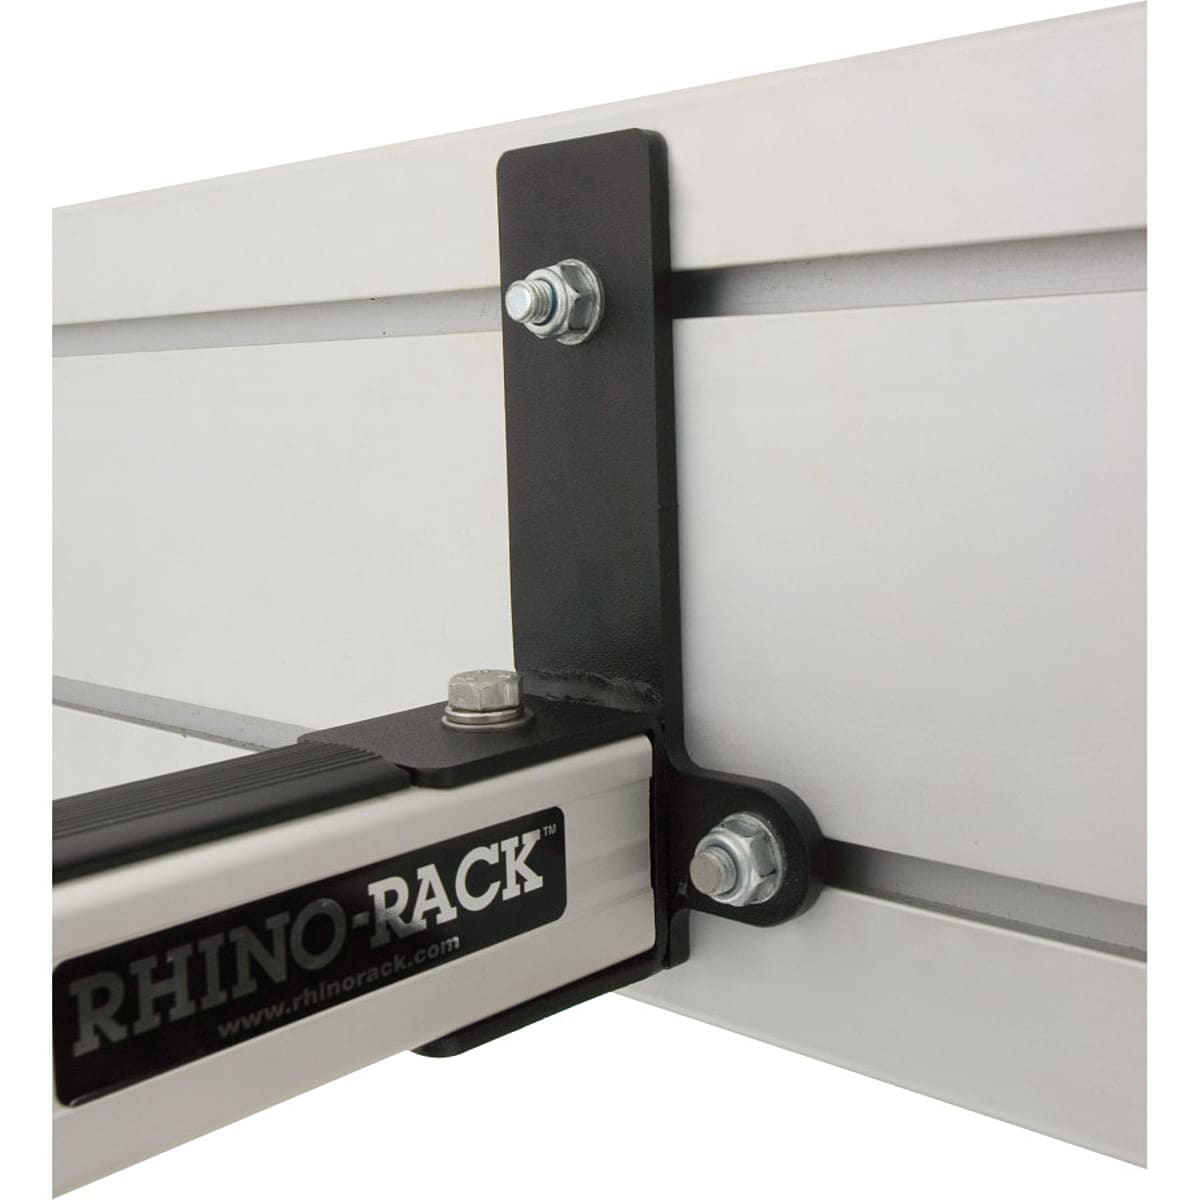 Rhino Rack Foxwing H/D Bracket Fit Kit for Rhino Rack H/D Bars